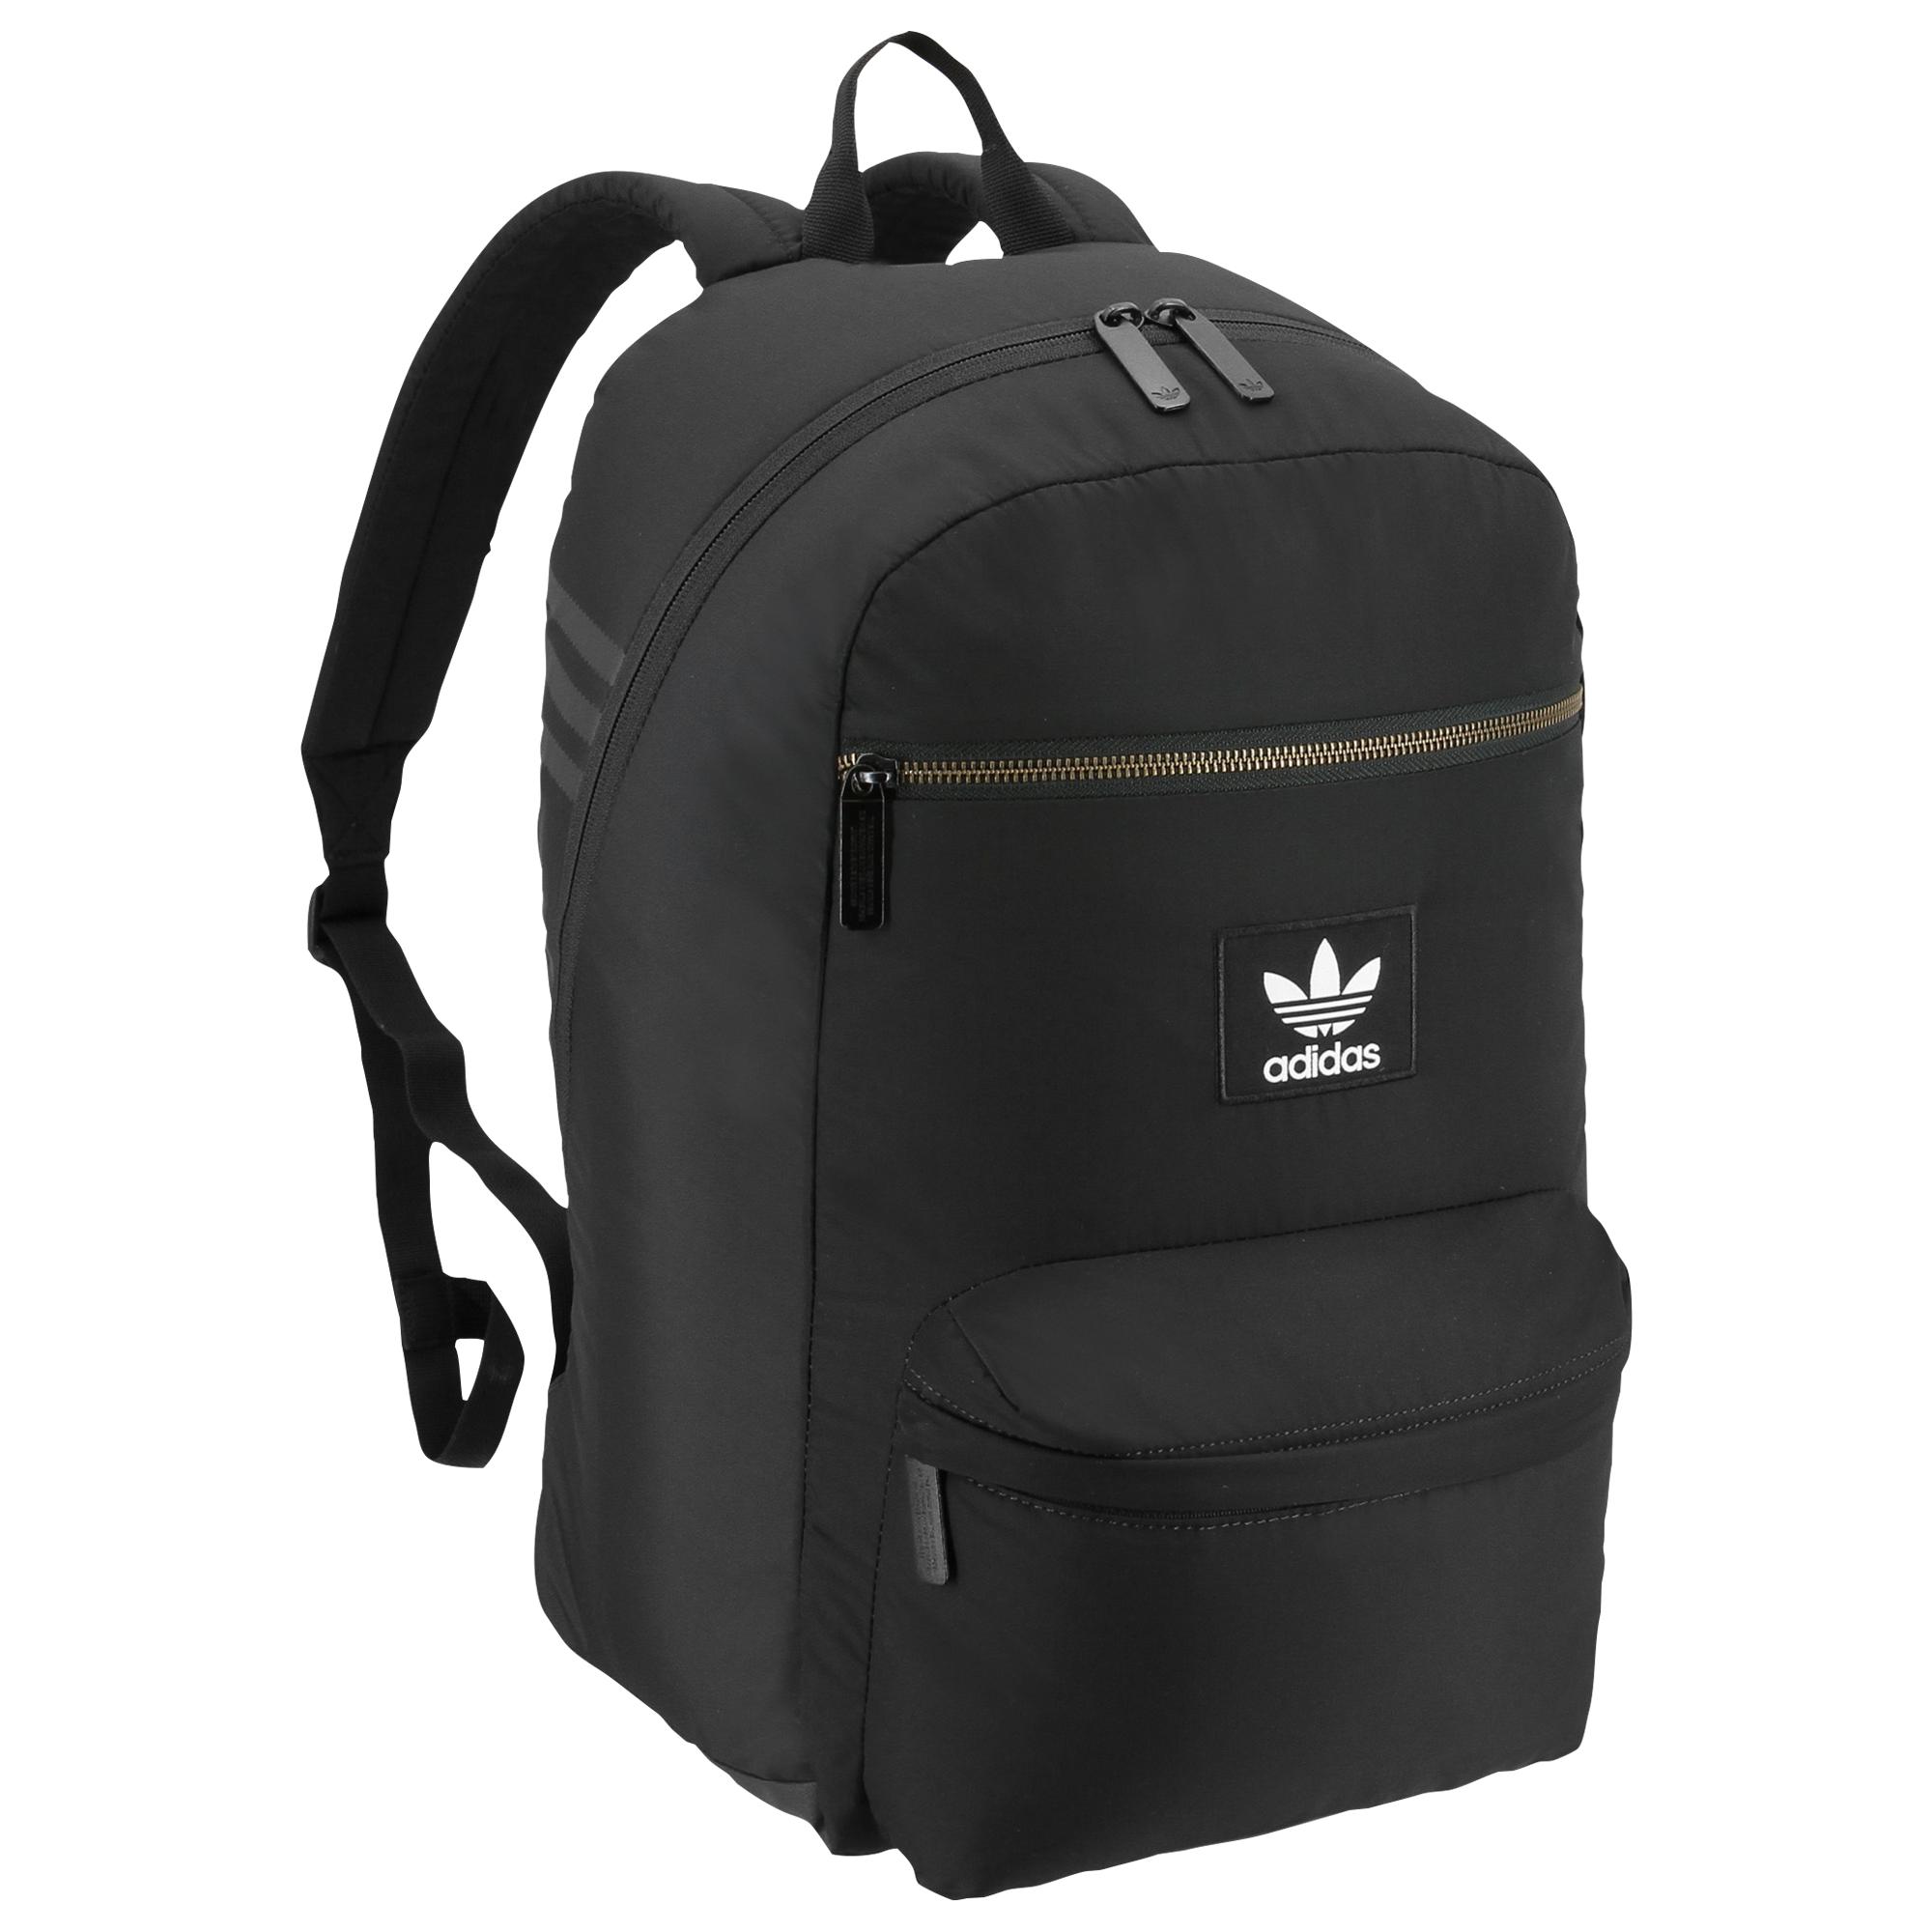 adidas Originals National Plus Backpack in Black for Men - Lyst